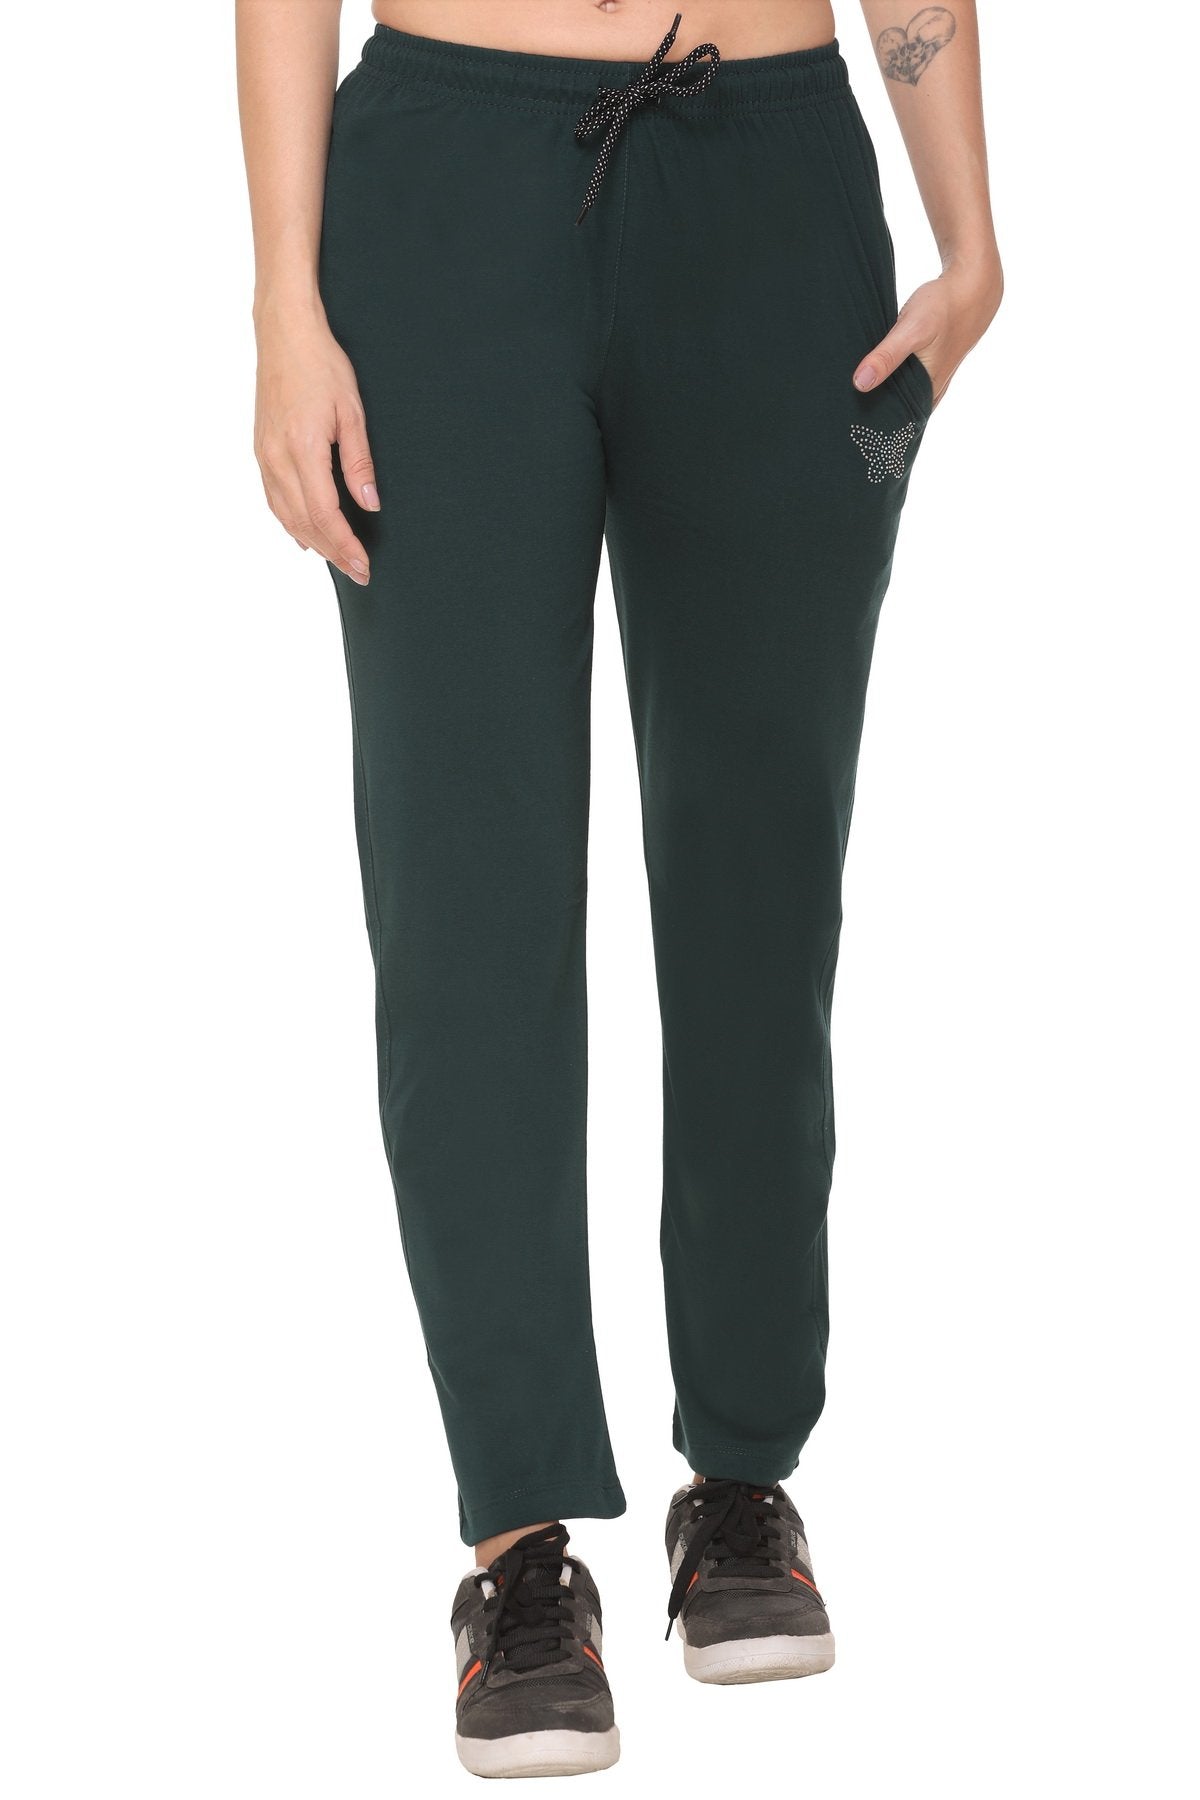 Buy Clovia Grey Active Track Pants for Women's Online @ Tata CLiQ